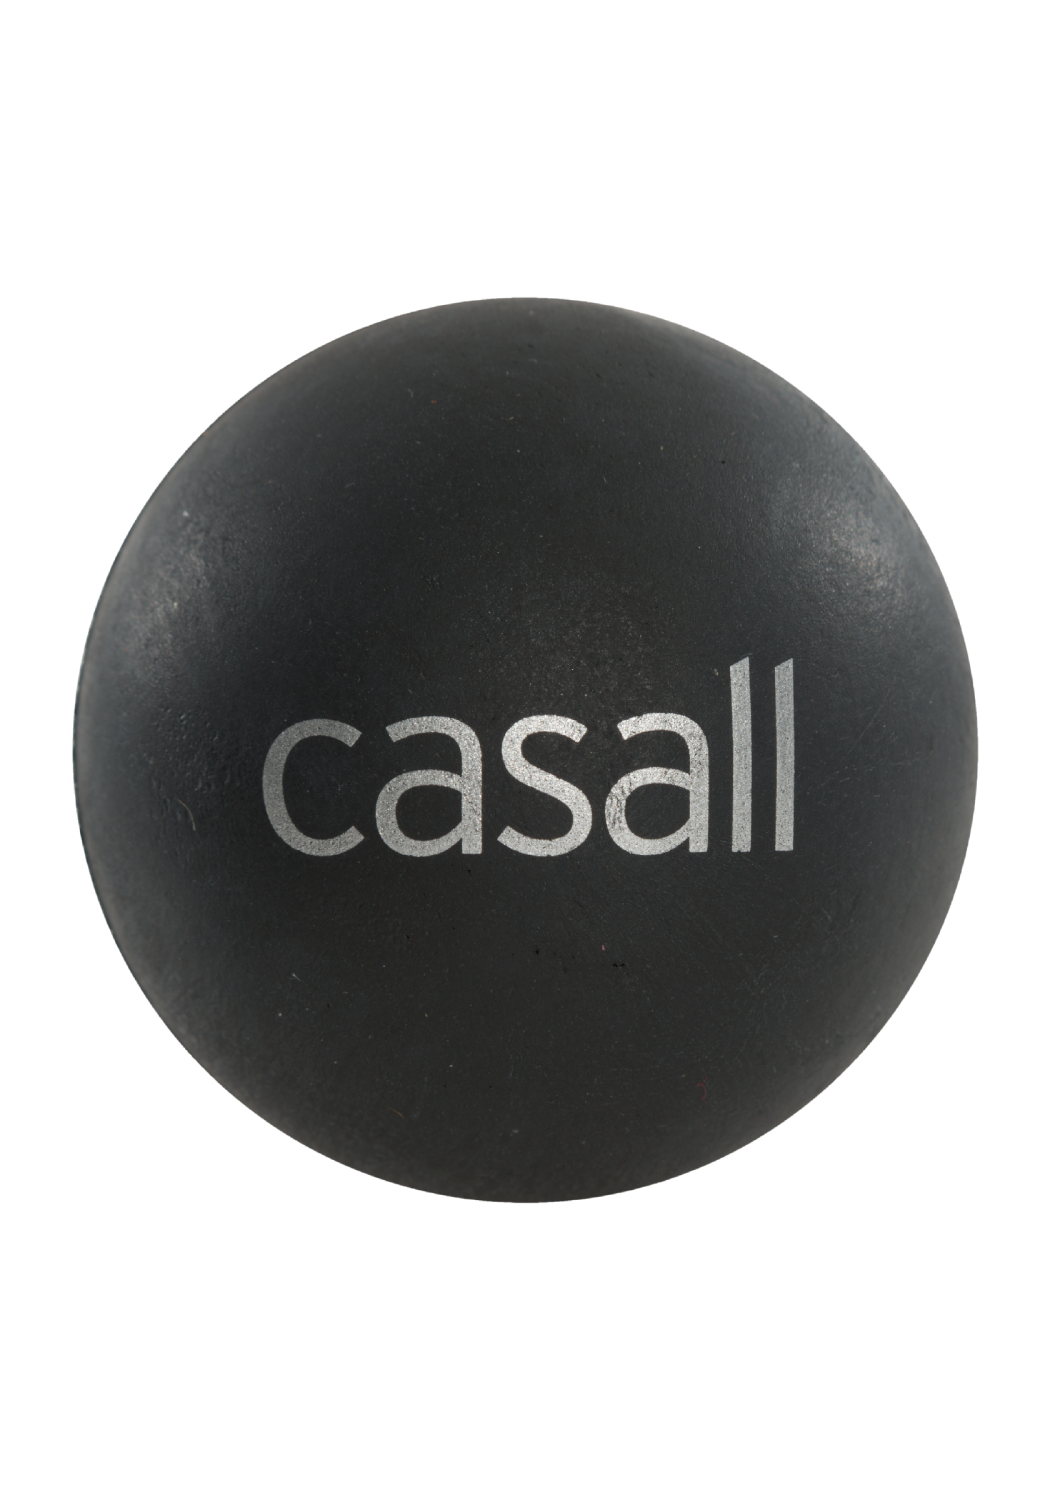 Pressure point ball - Casall